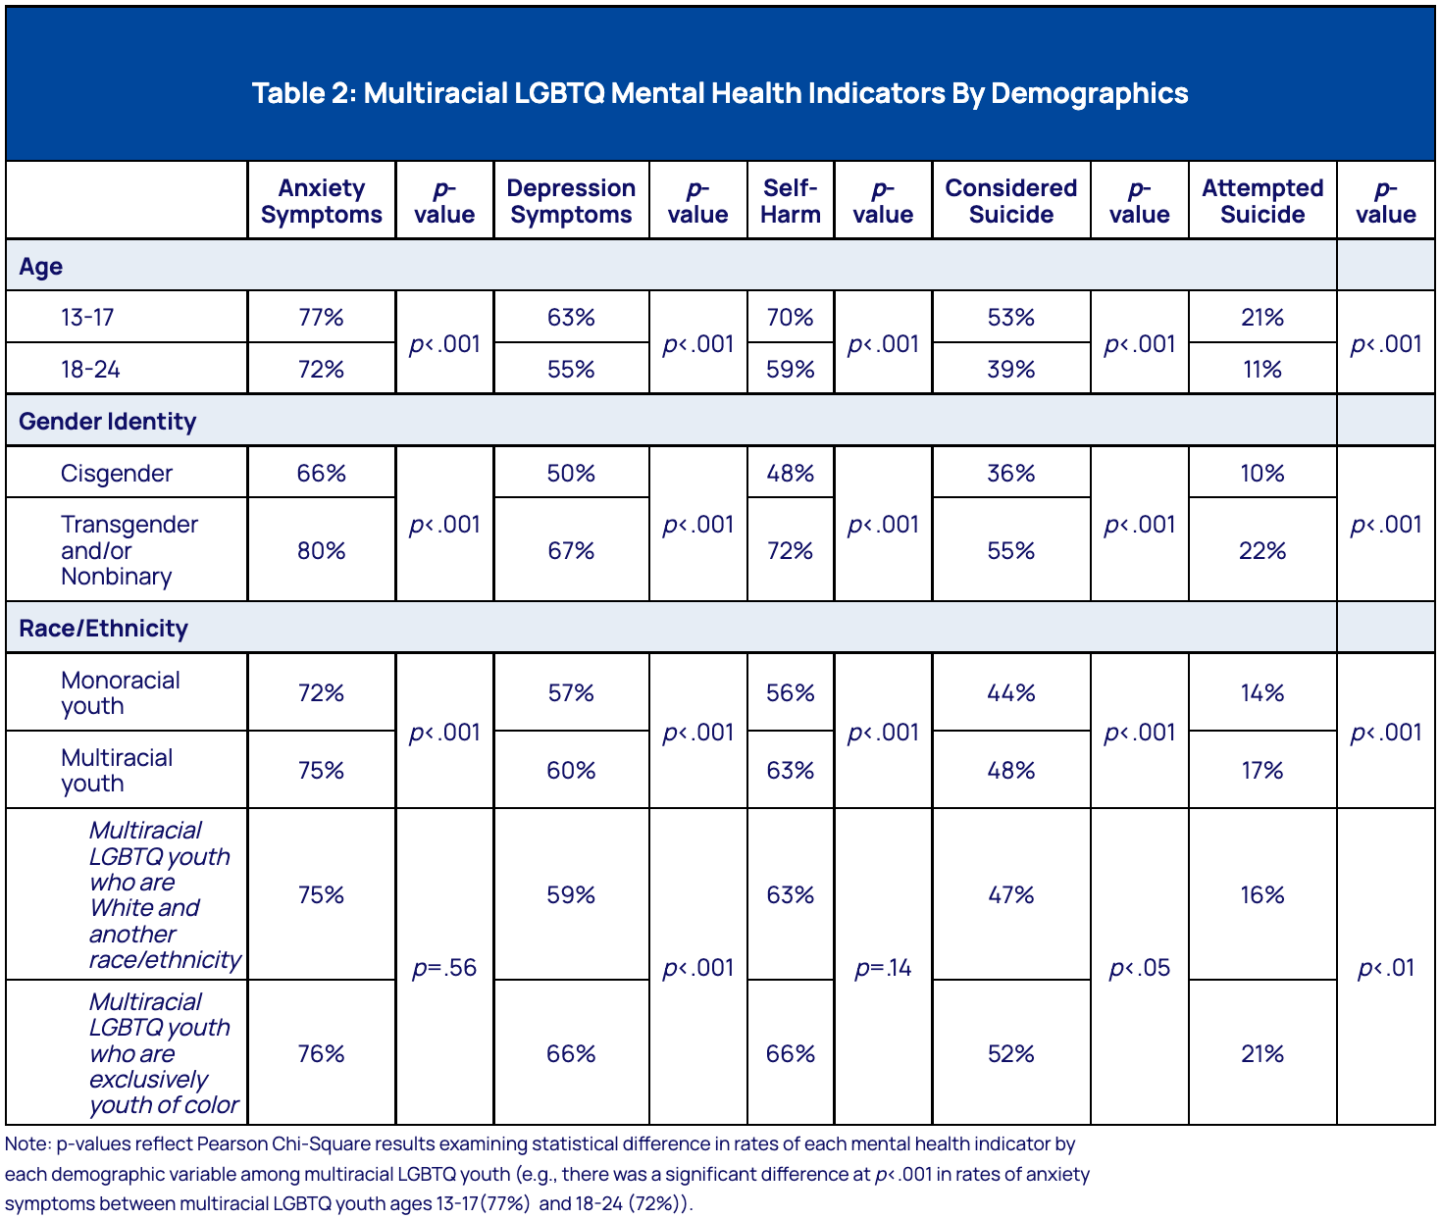 Multiracial LGBTQ Mental Health Indicators by Demographics table